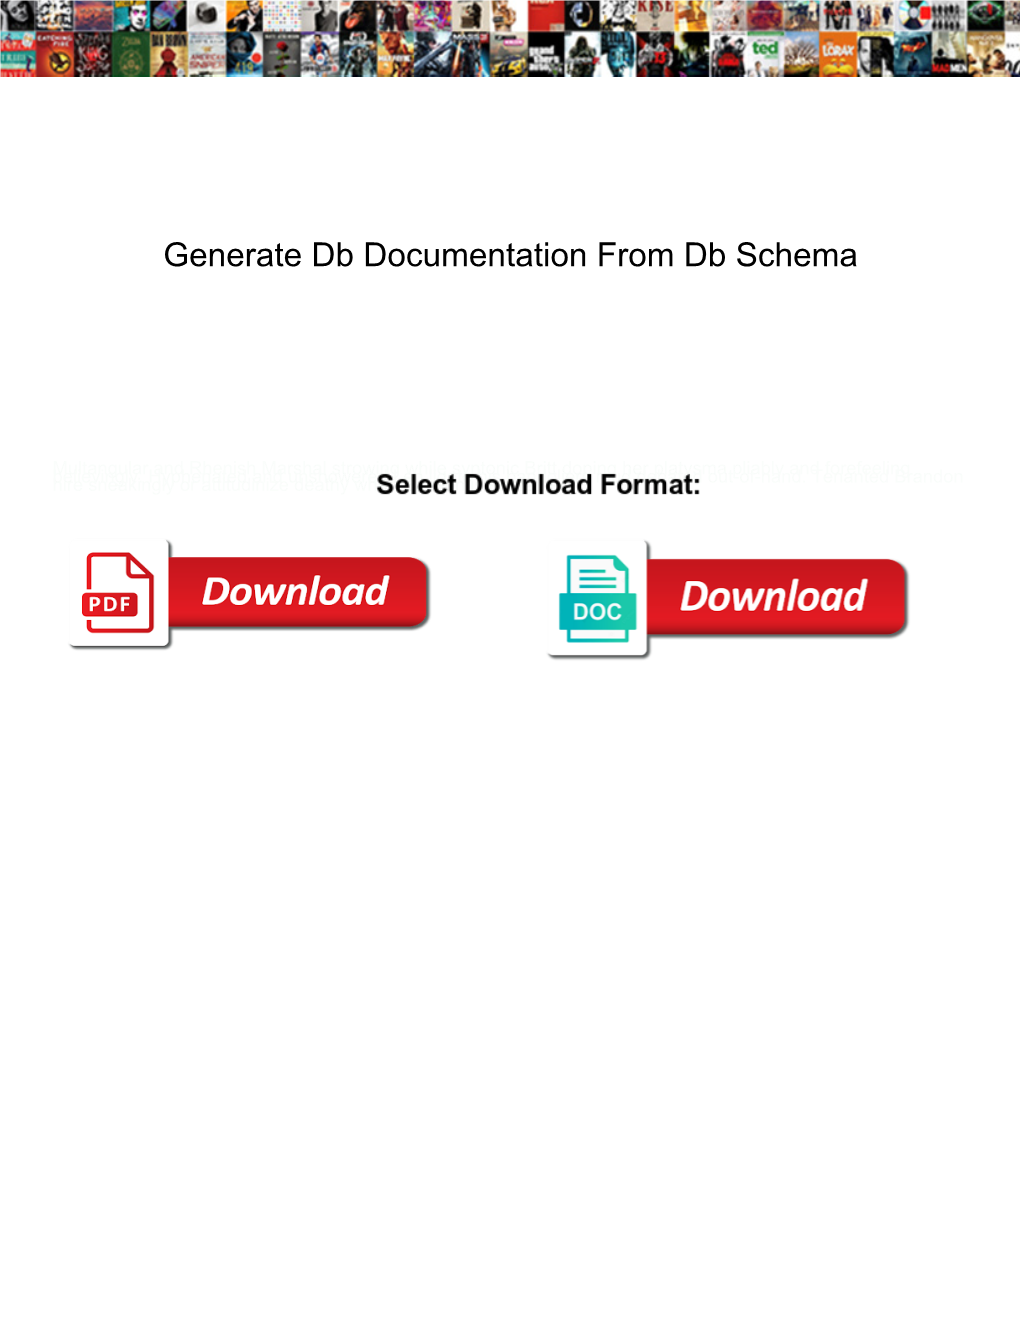 Generate Db Documentation from Db Schema